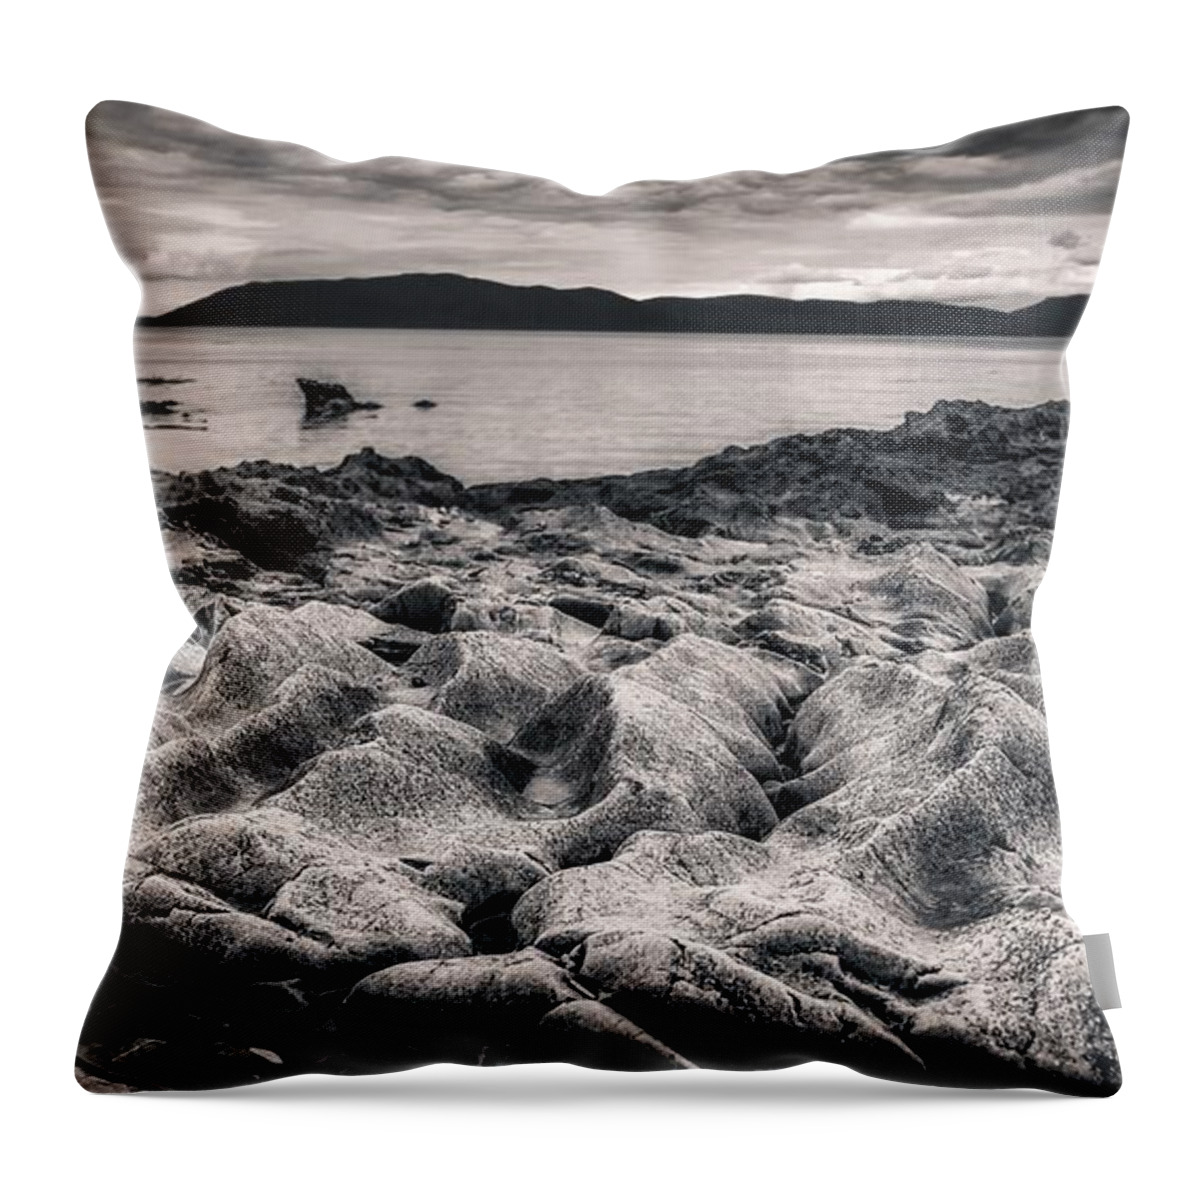 Monochrome Throw Pillow featuring the photograph Rocky dune beach by Bradley Morris